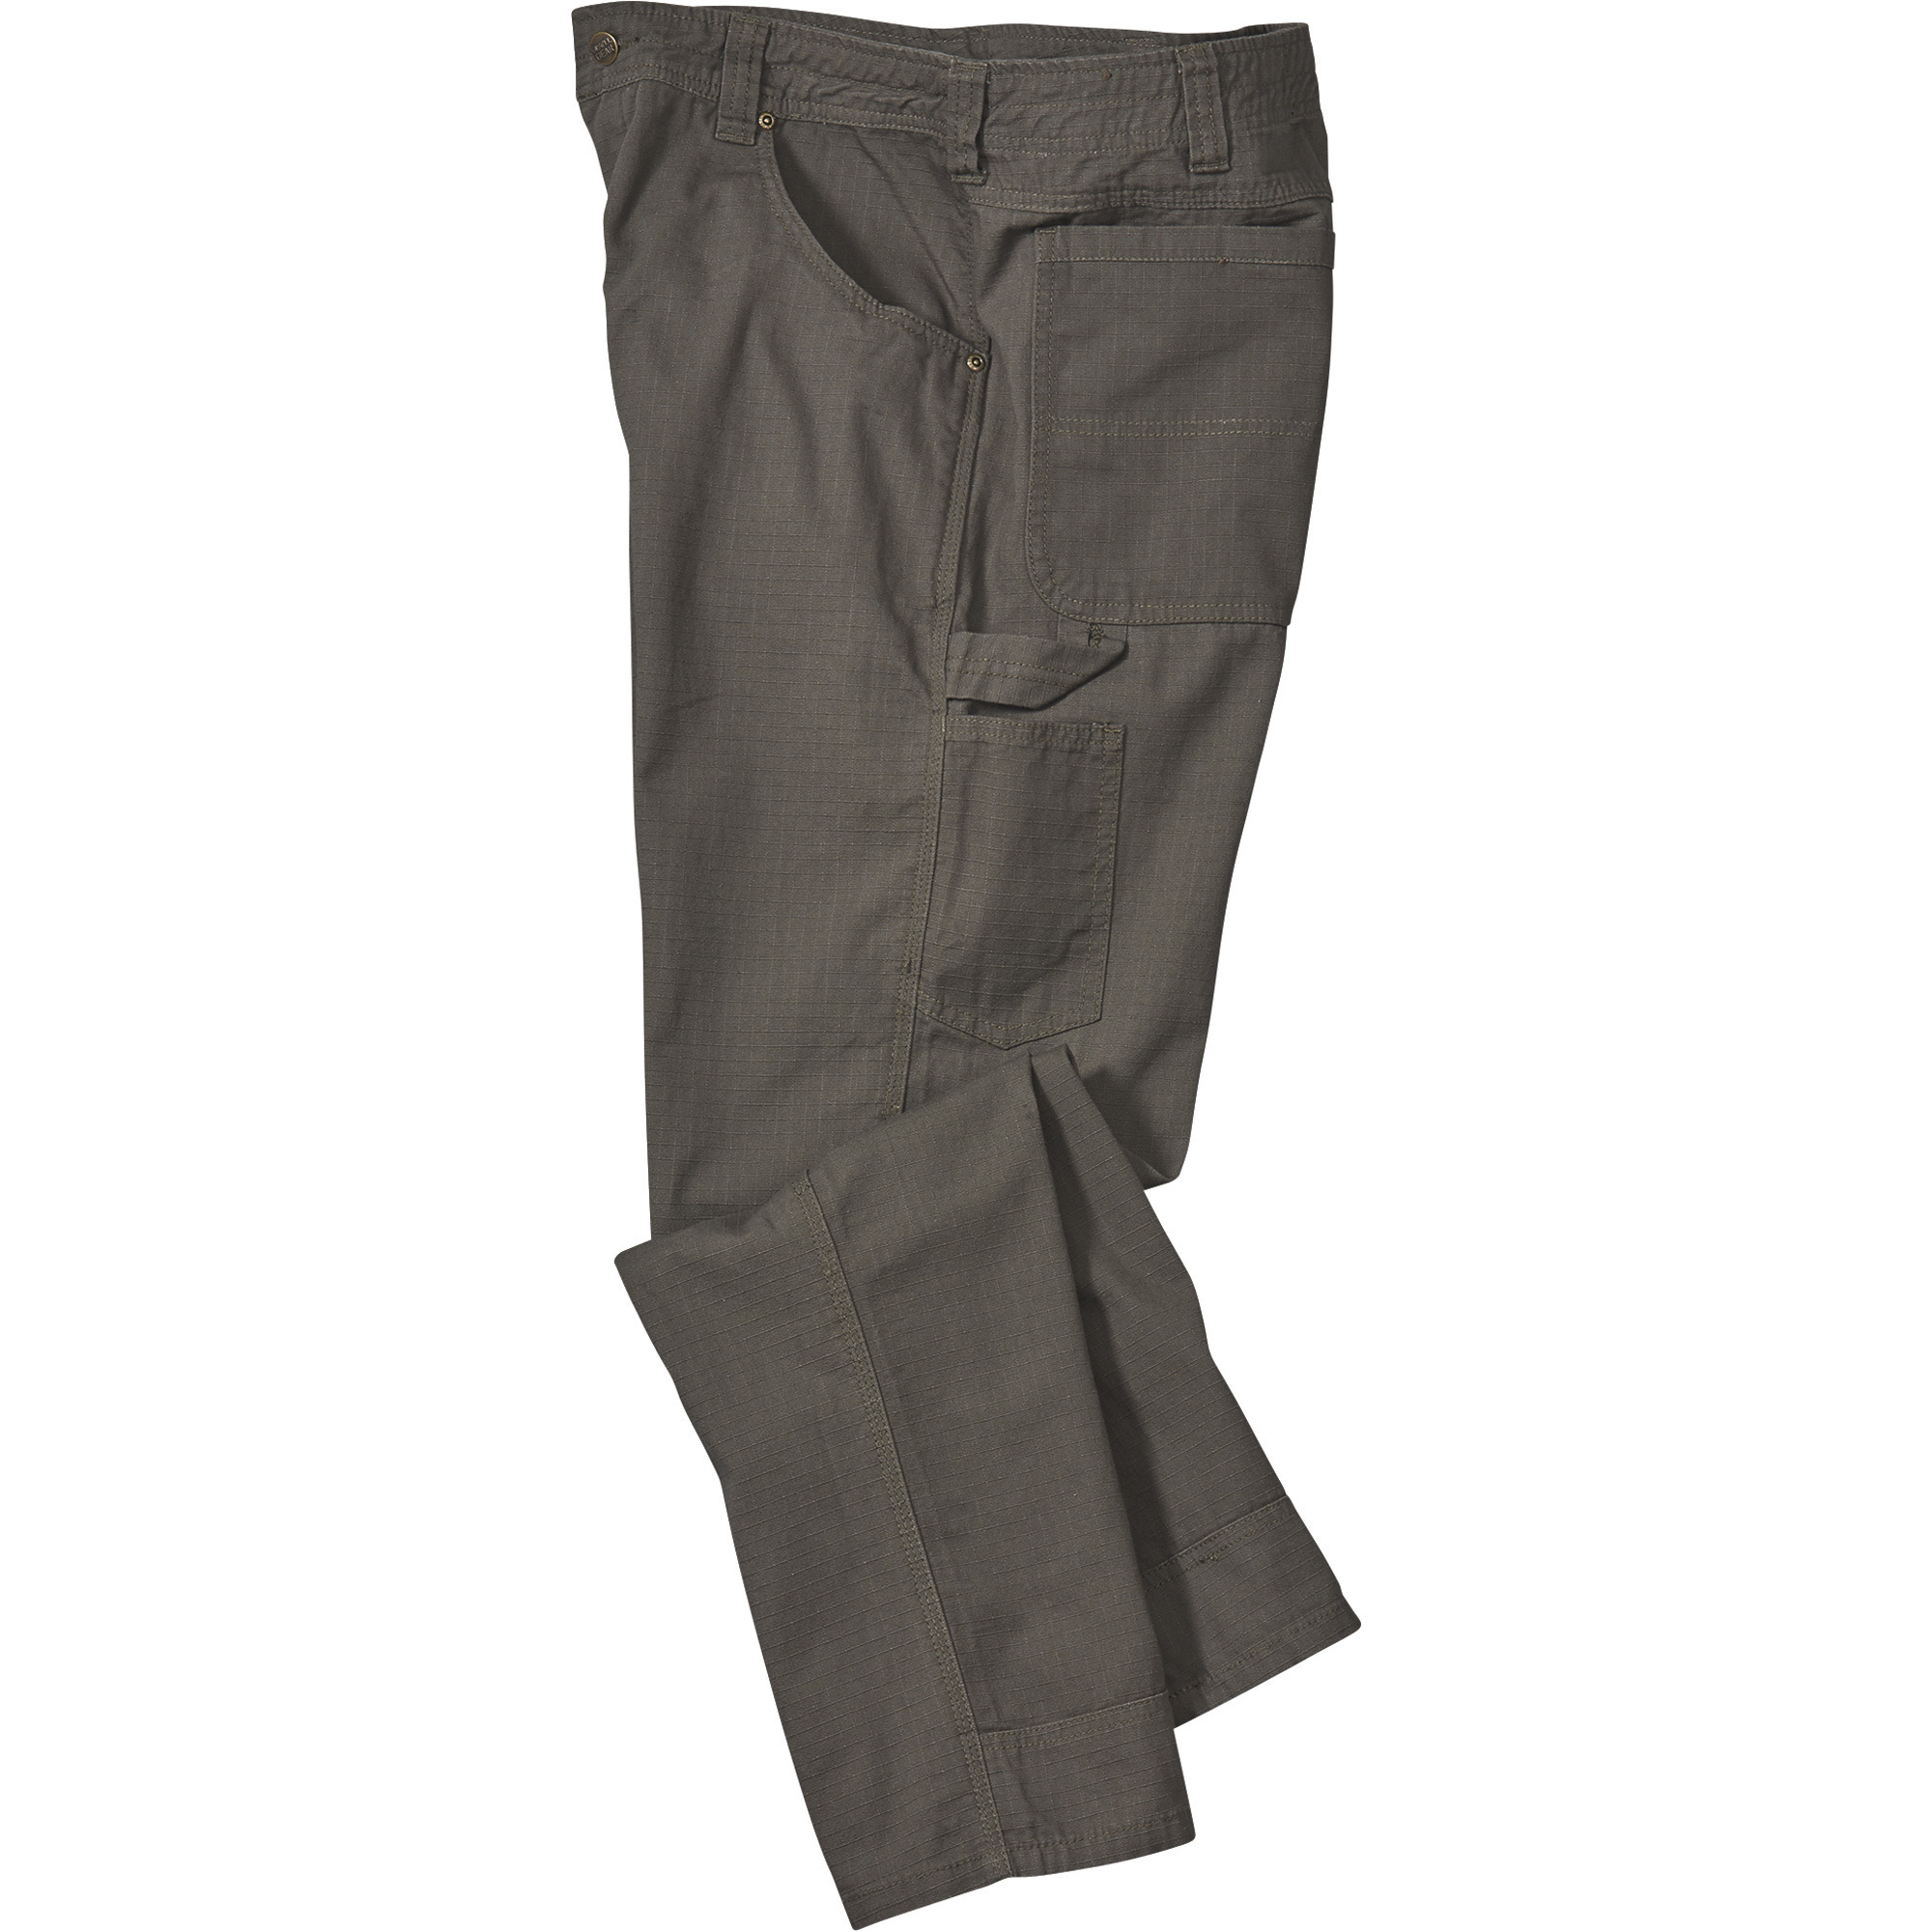 Gravel Gear Men's Cotton Ripstop Carpenter Pants with Teflon Fabric Protector â Moss, 38Inch Waist x 34Inch Inseam